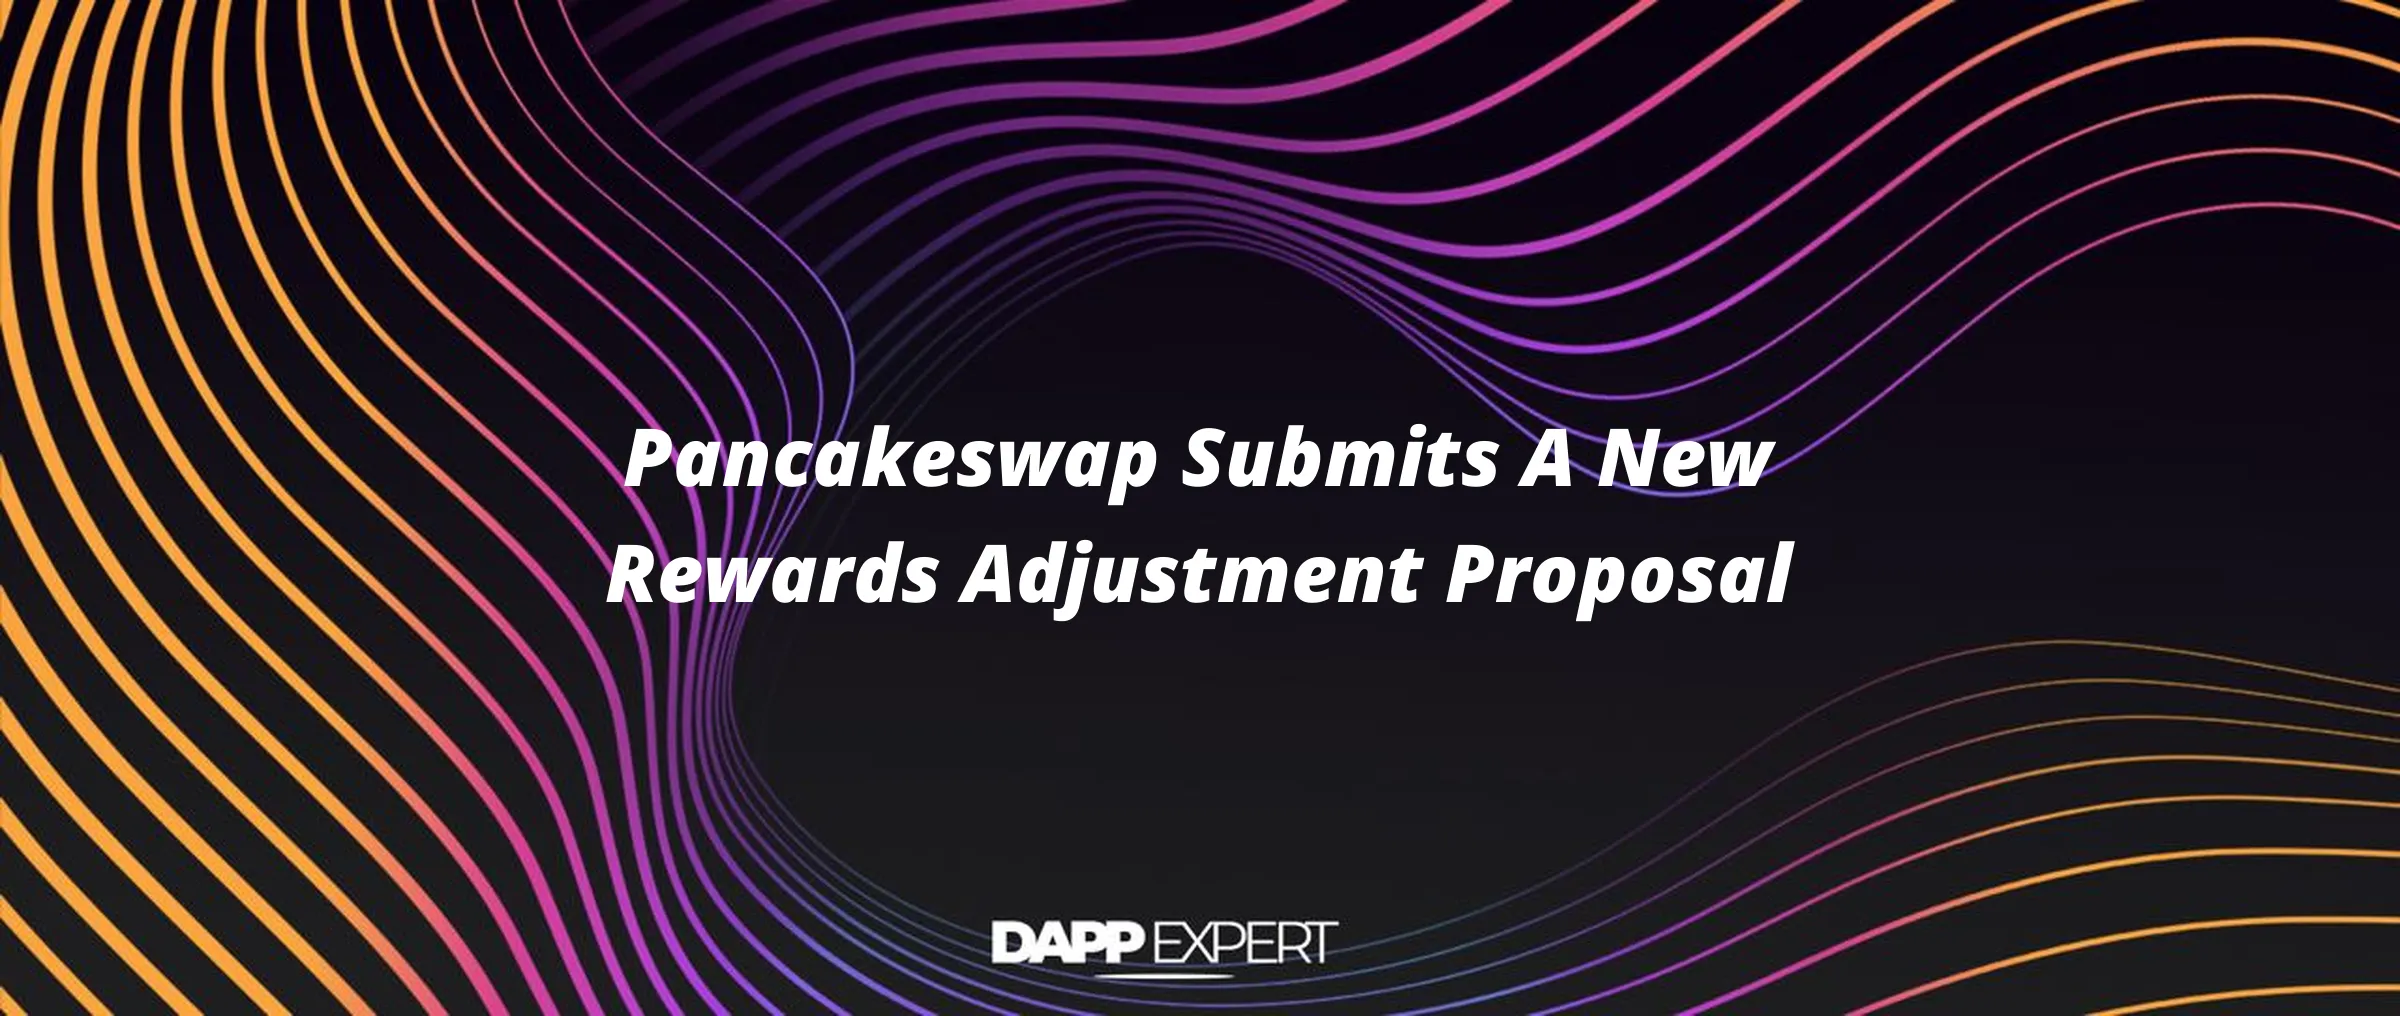 Pancakeswap Submits A New Rewards Adjustment Proposal